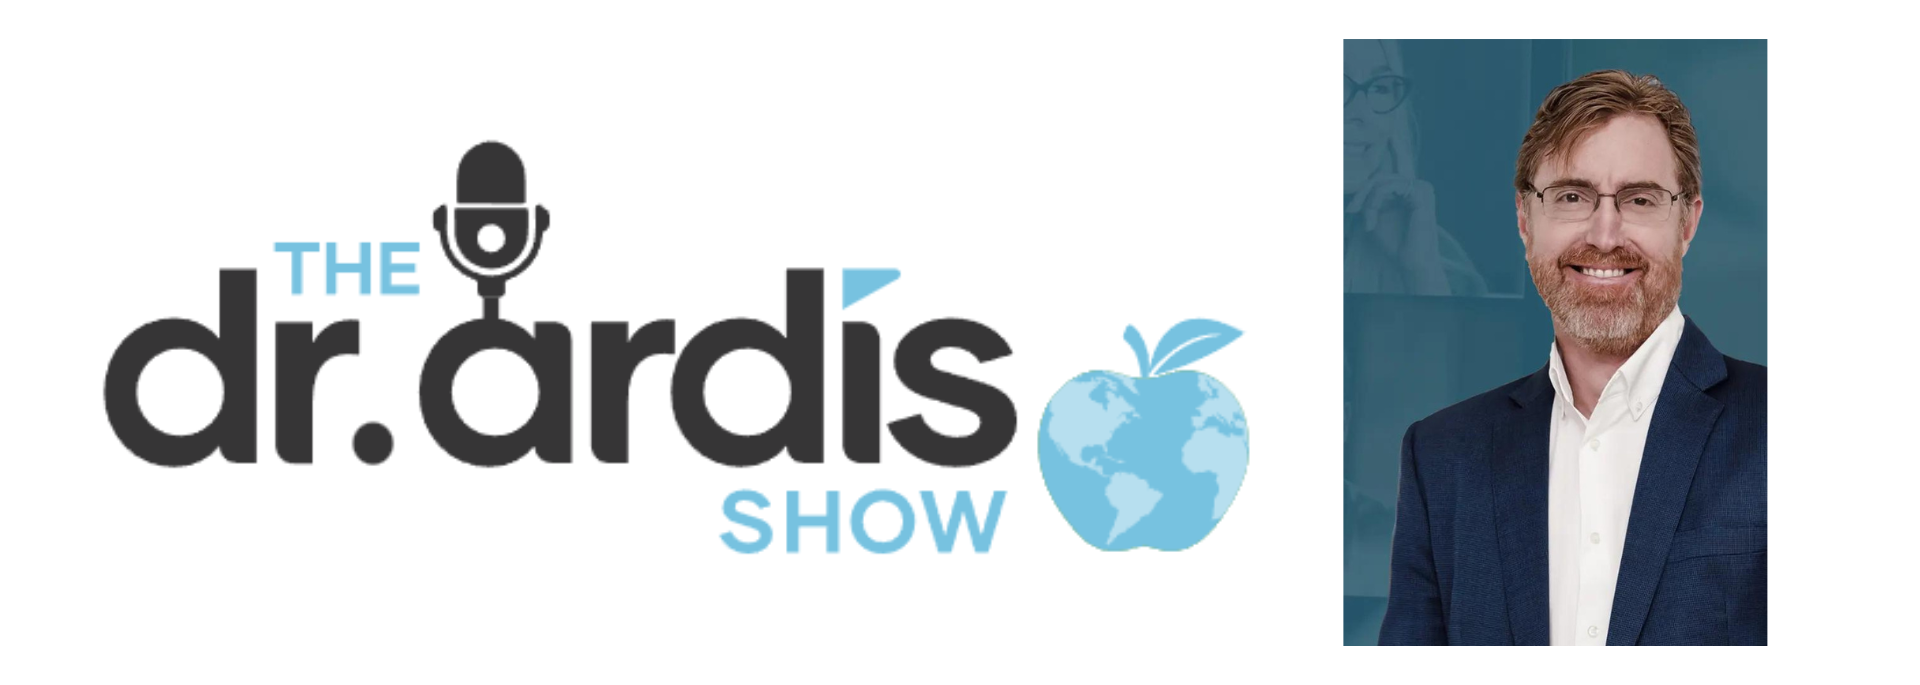 Dr. Ardis Show